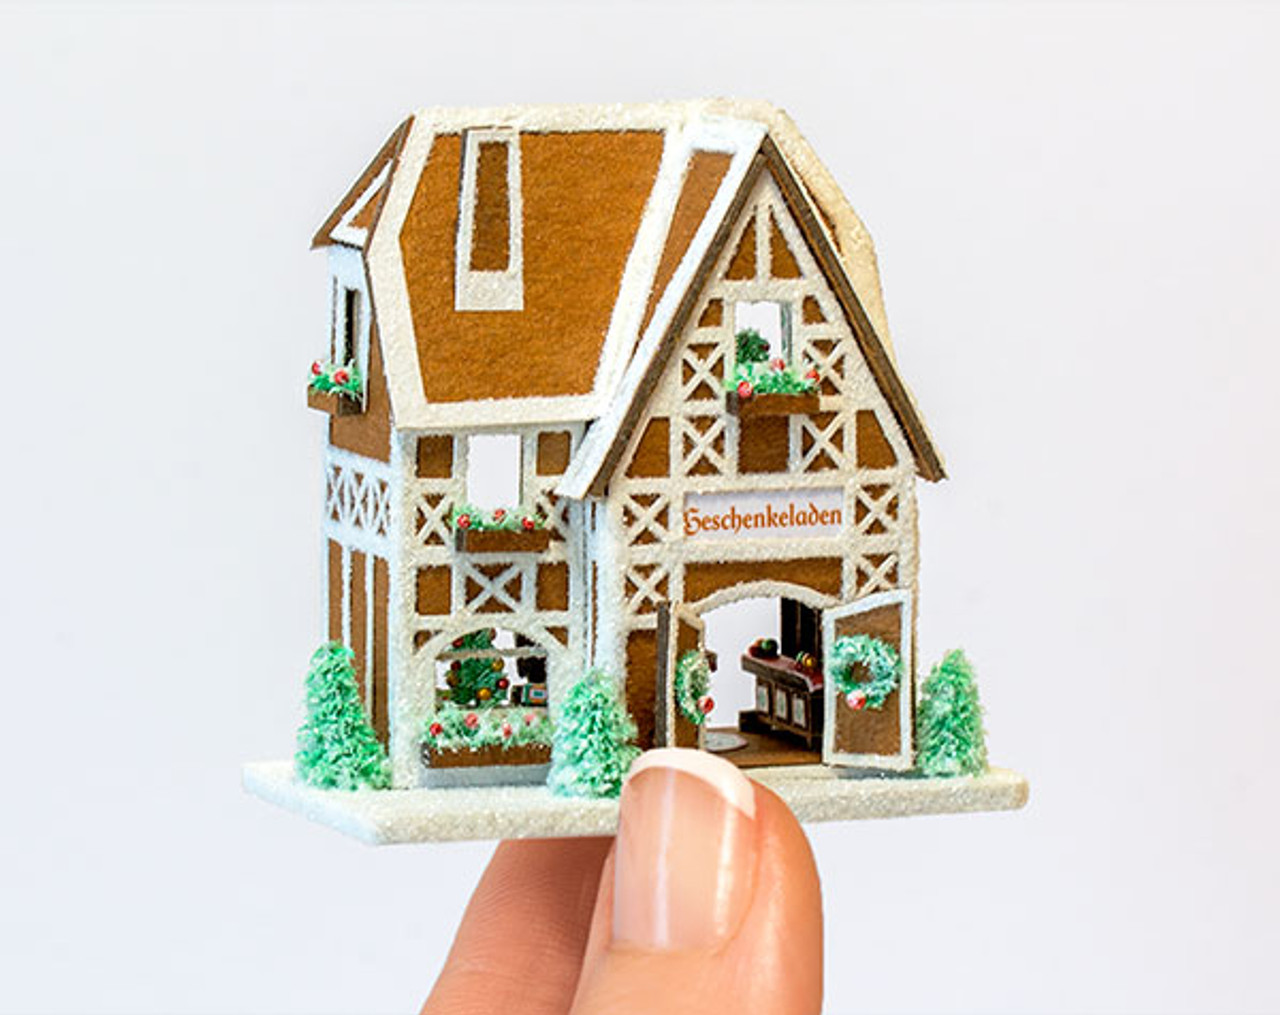 Miniature Assortment of Art Supplies (1 inch dollhouse scale)